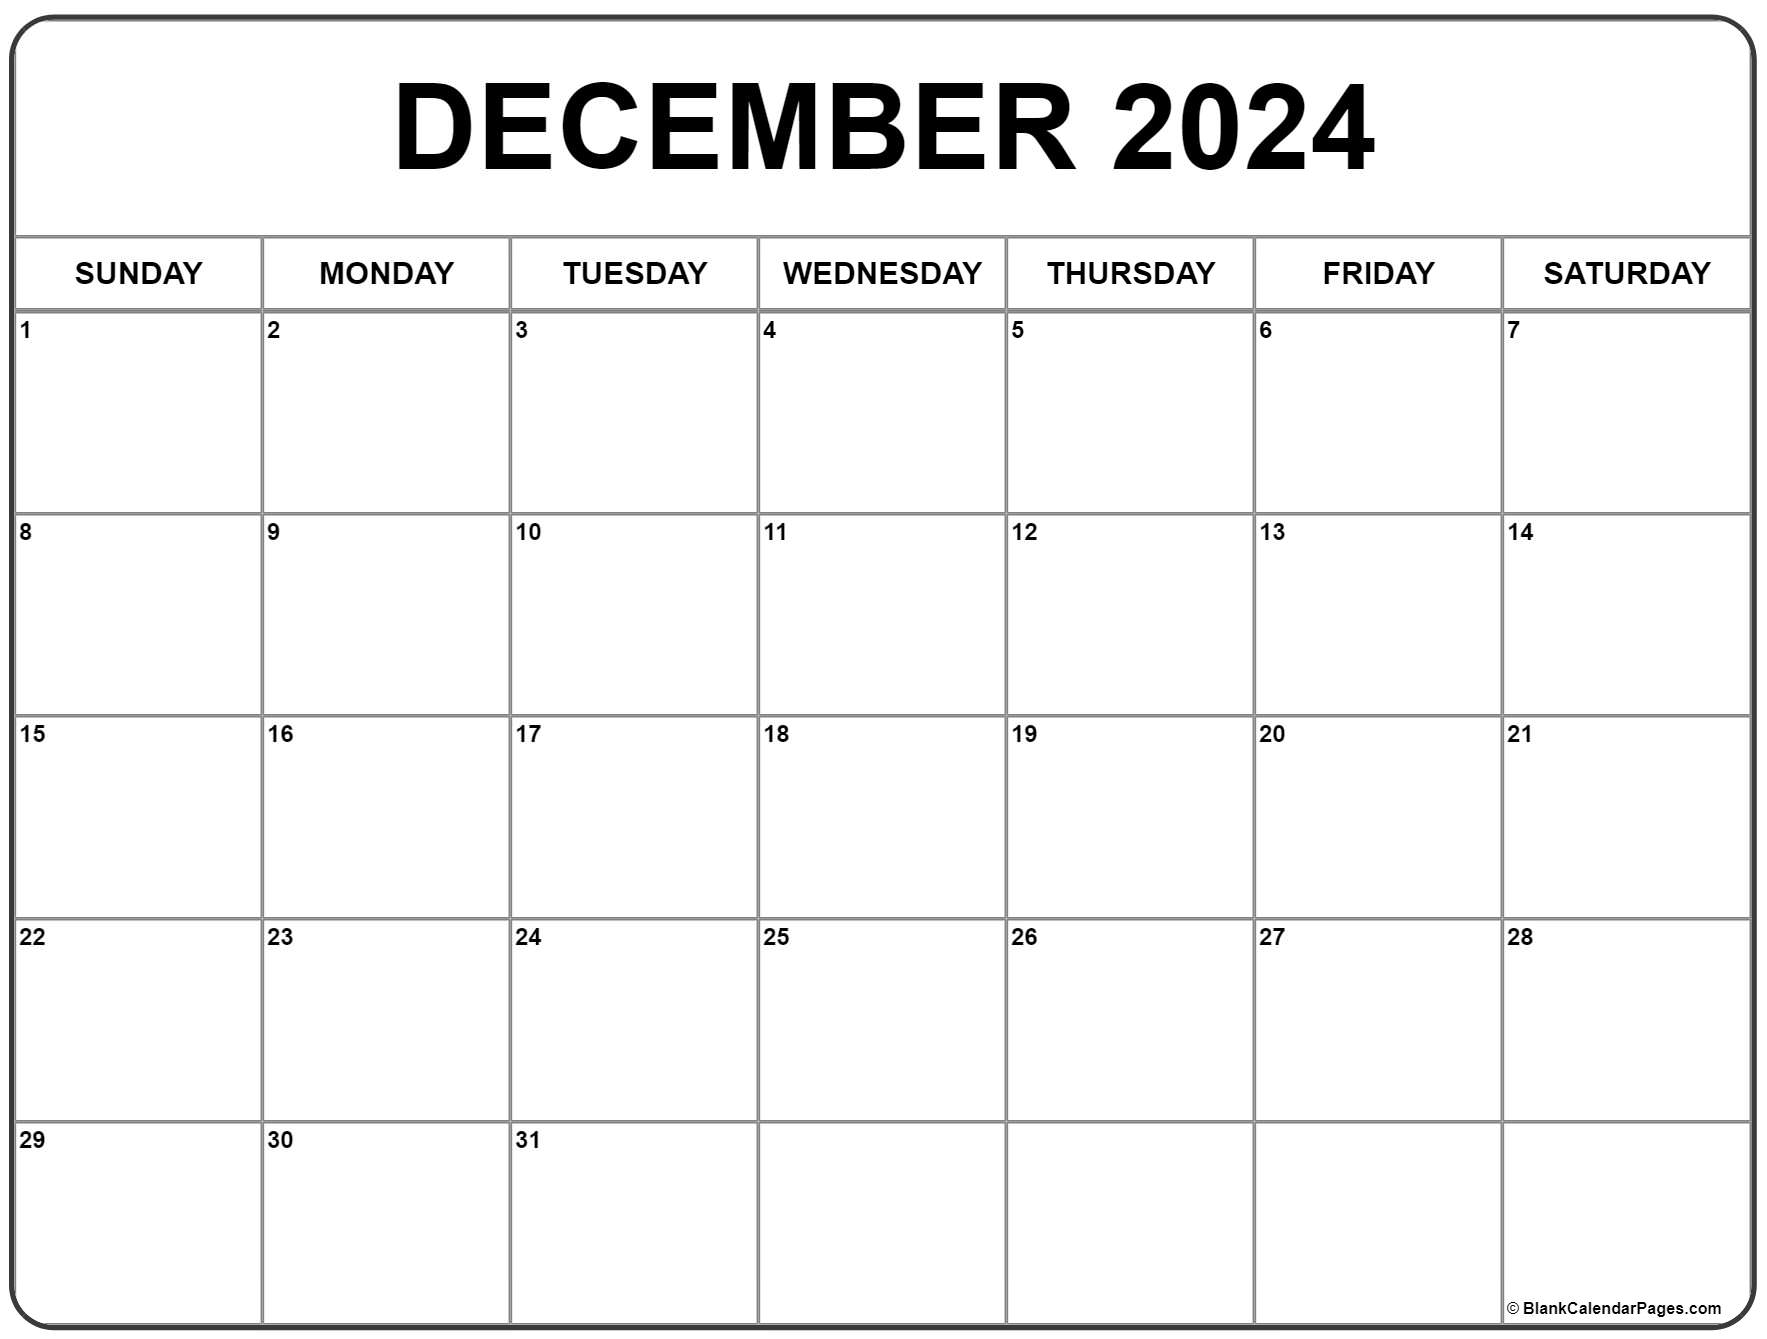 November And December 2022 Calendar Printable December 2022 Calendar | Free Printable Calendar Templates